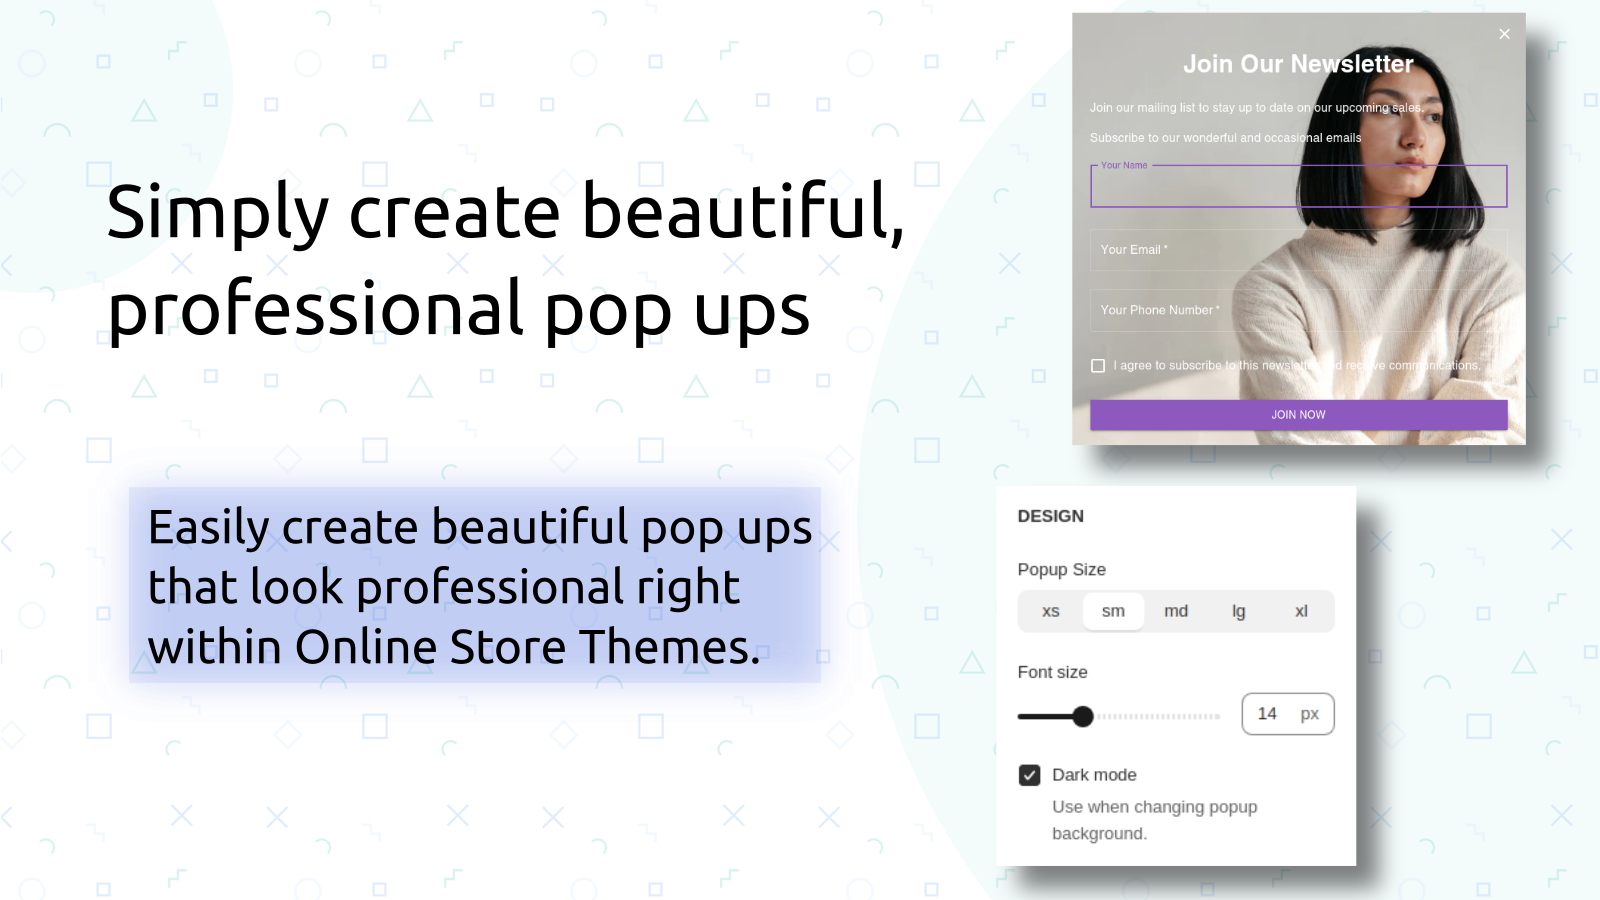 Simply create beautiful, professional popups